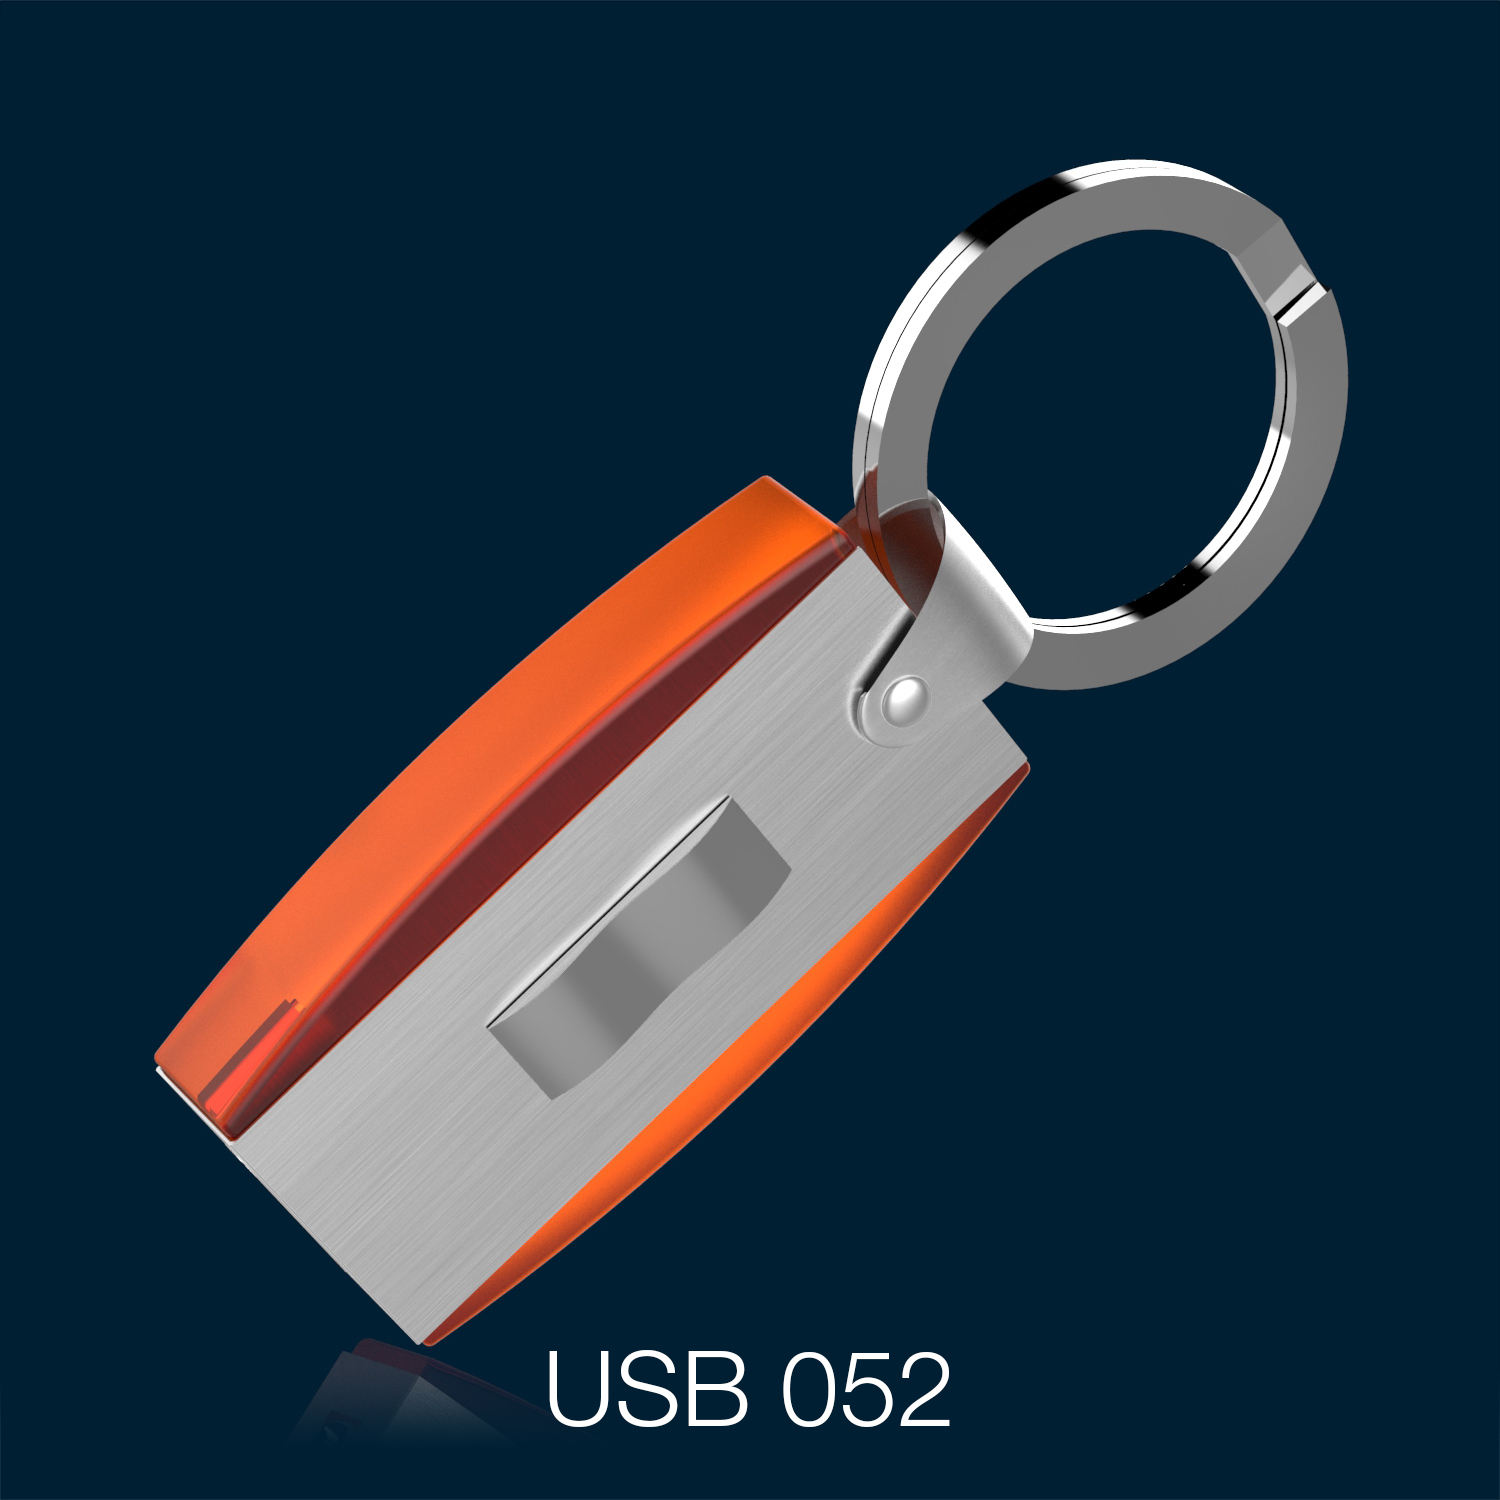 USB 052